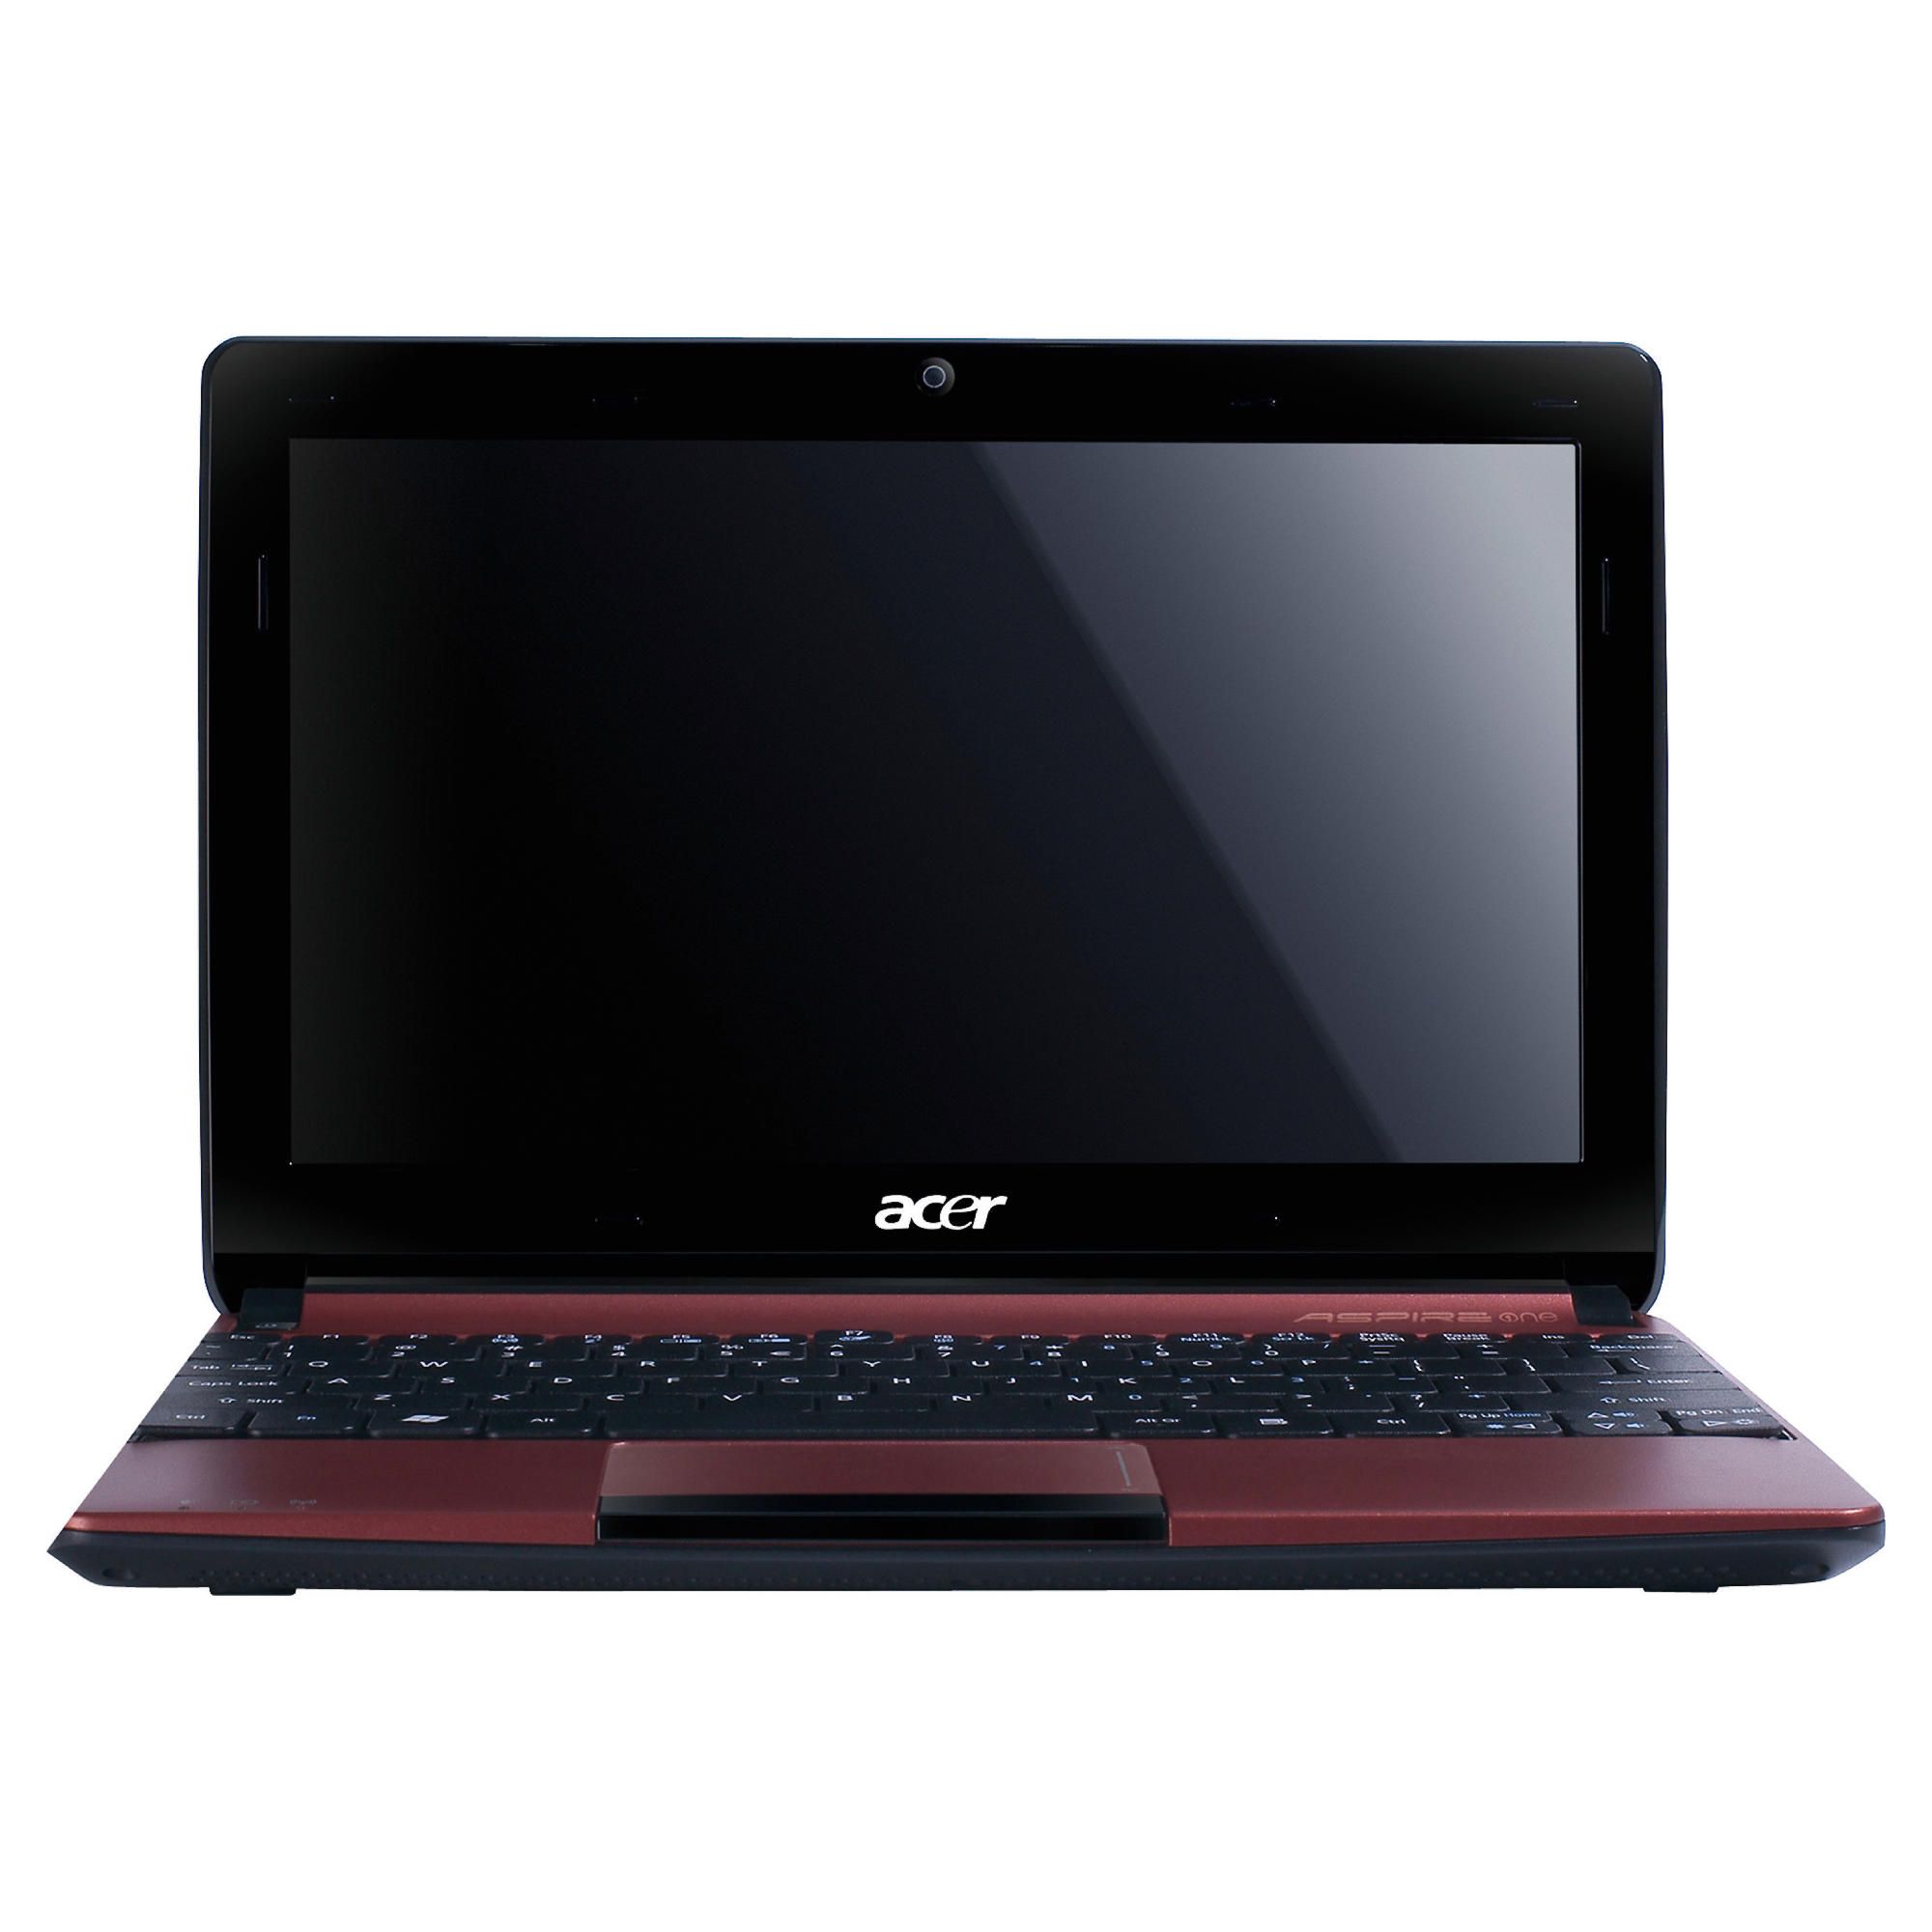 Acer Aspire One D255 Netbook (Atom N550, 1GB, 250GB, 10.1'' Display, Windows 7 Starter) Red at Tesco Direct